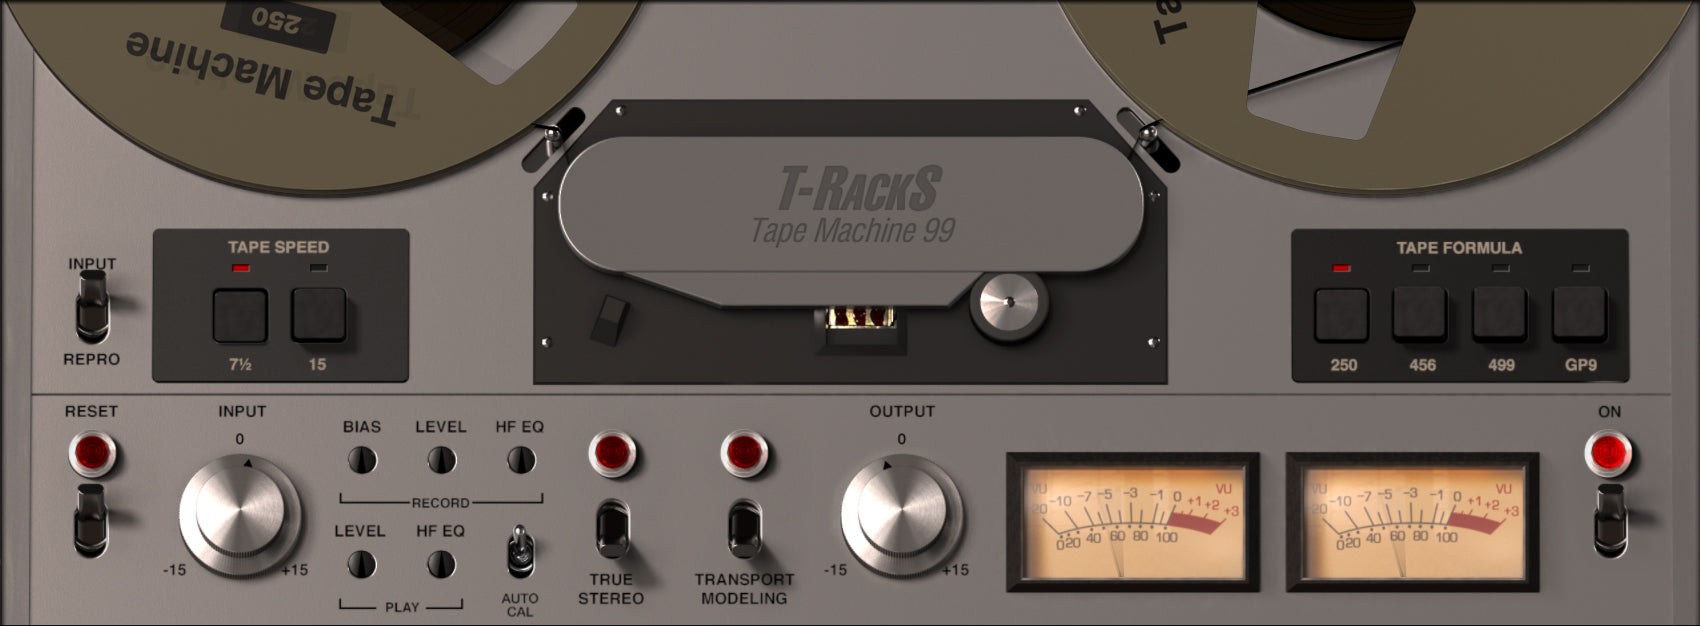 IK Multimedia T-RackS Tape Machine 99